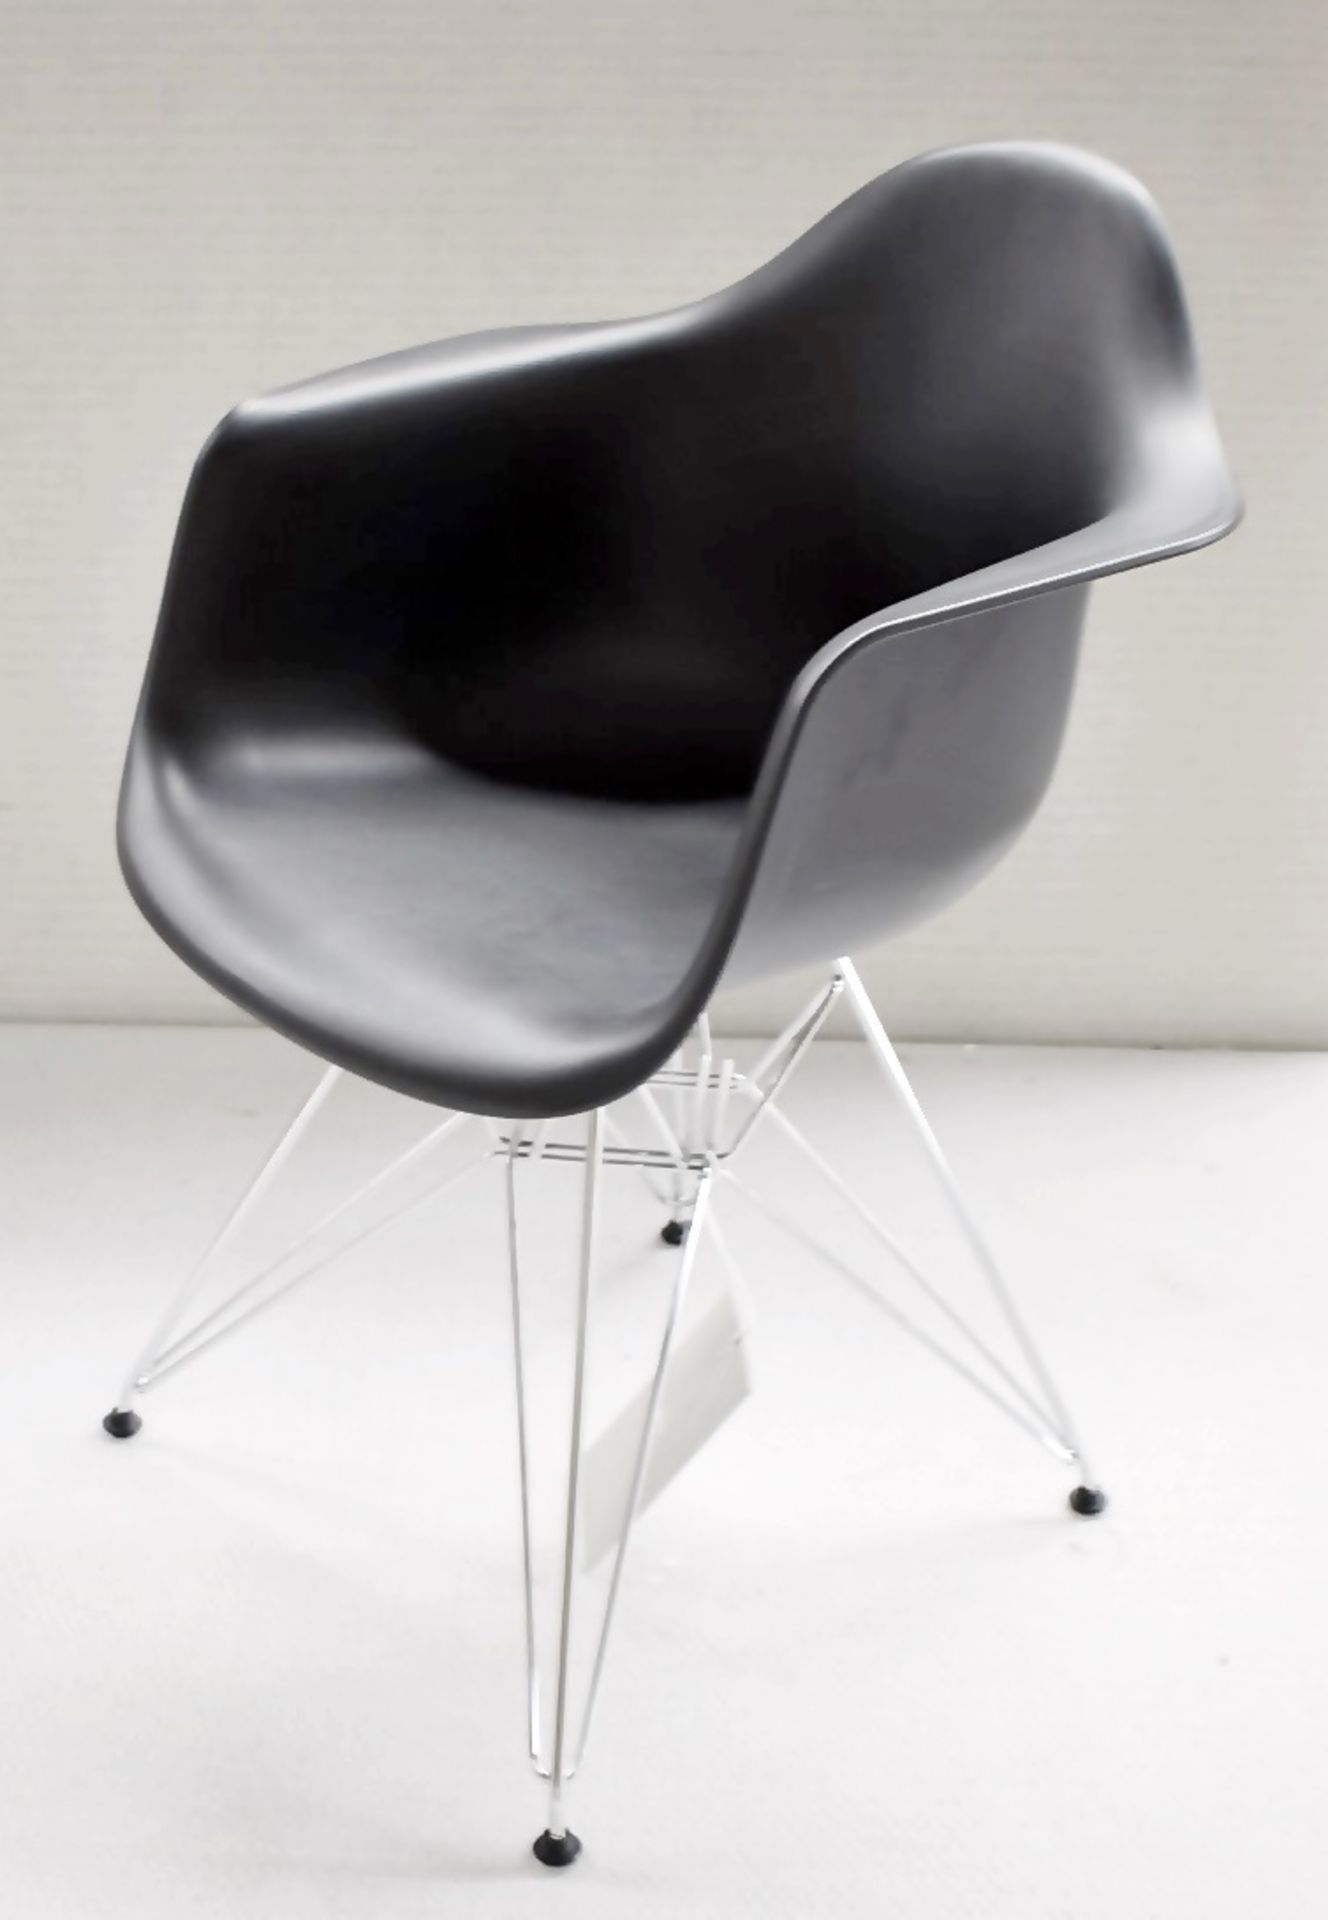 1 x VITRA Eames DAR Designer Plastic Armchair In Black & Chrome -  Original RRP £460.00 - Image 2 of 5